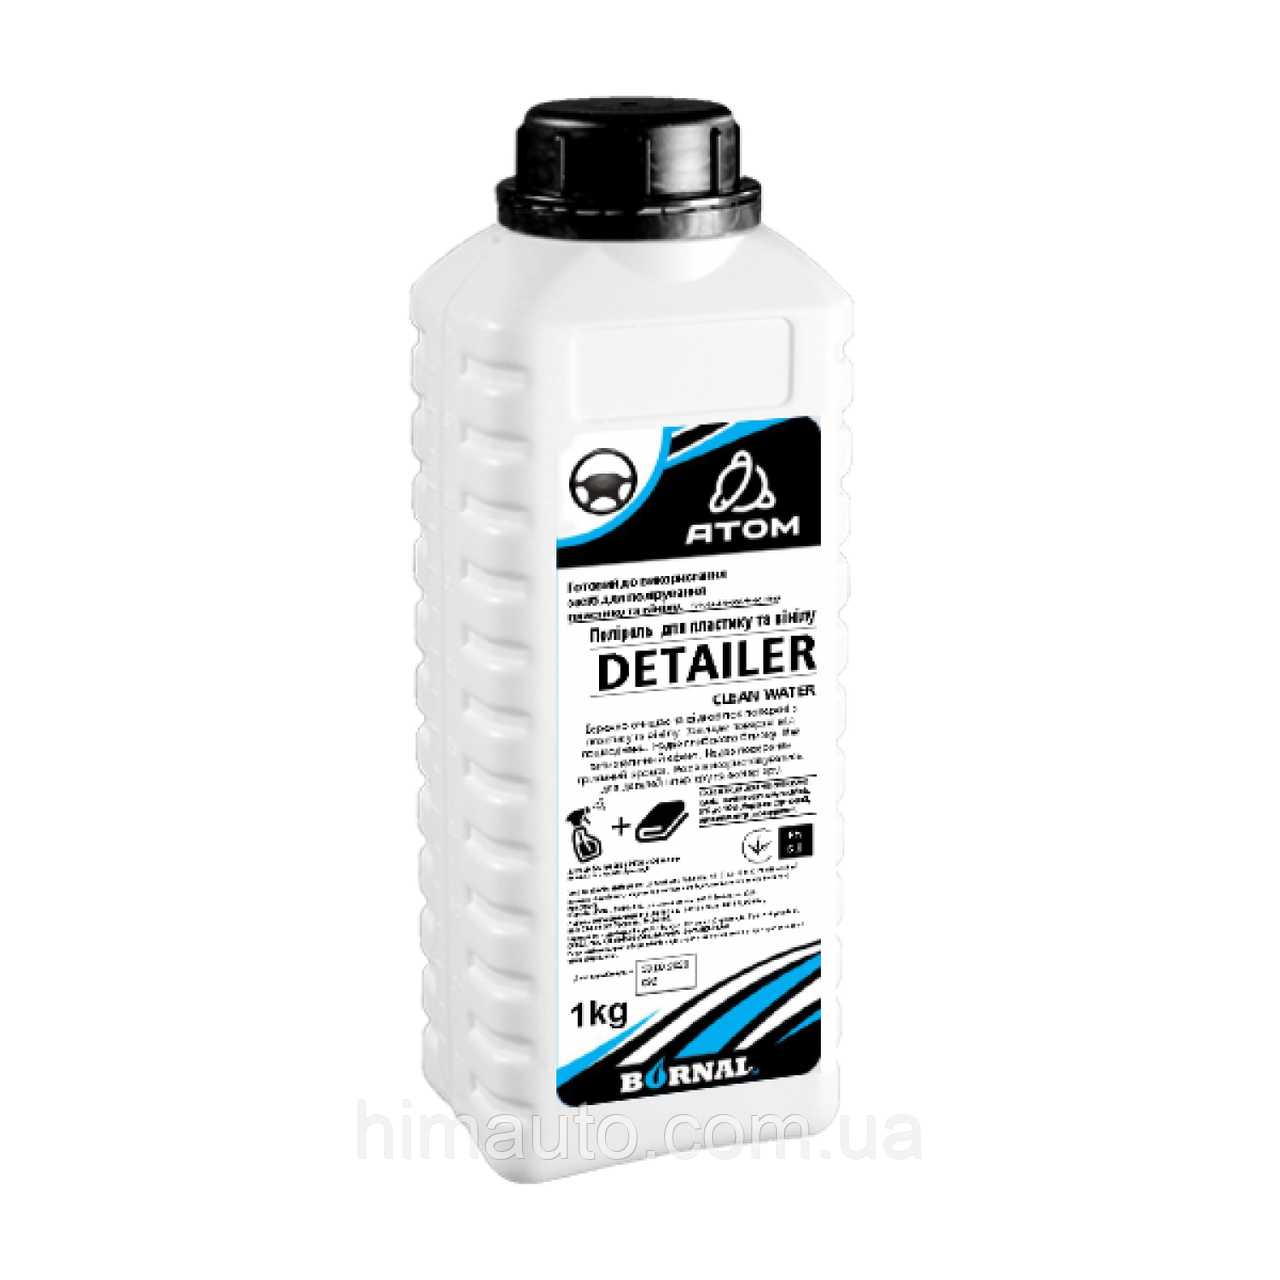 Поліроль для пластику ATOM Detailer Clean Water з ароматом свіжість концентрат, 1 кг (блиск).